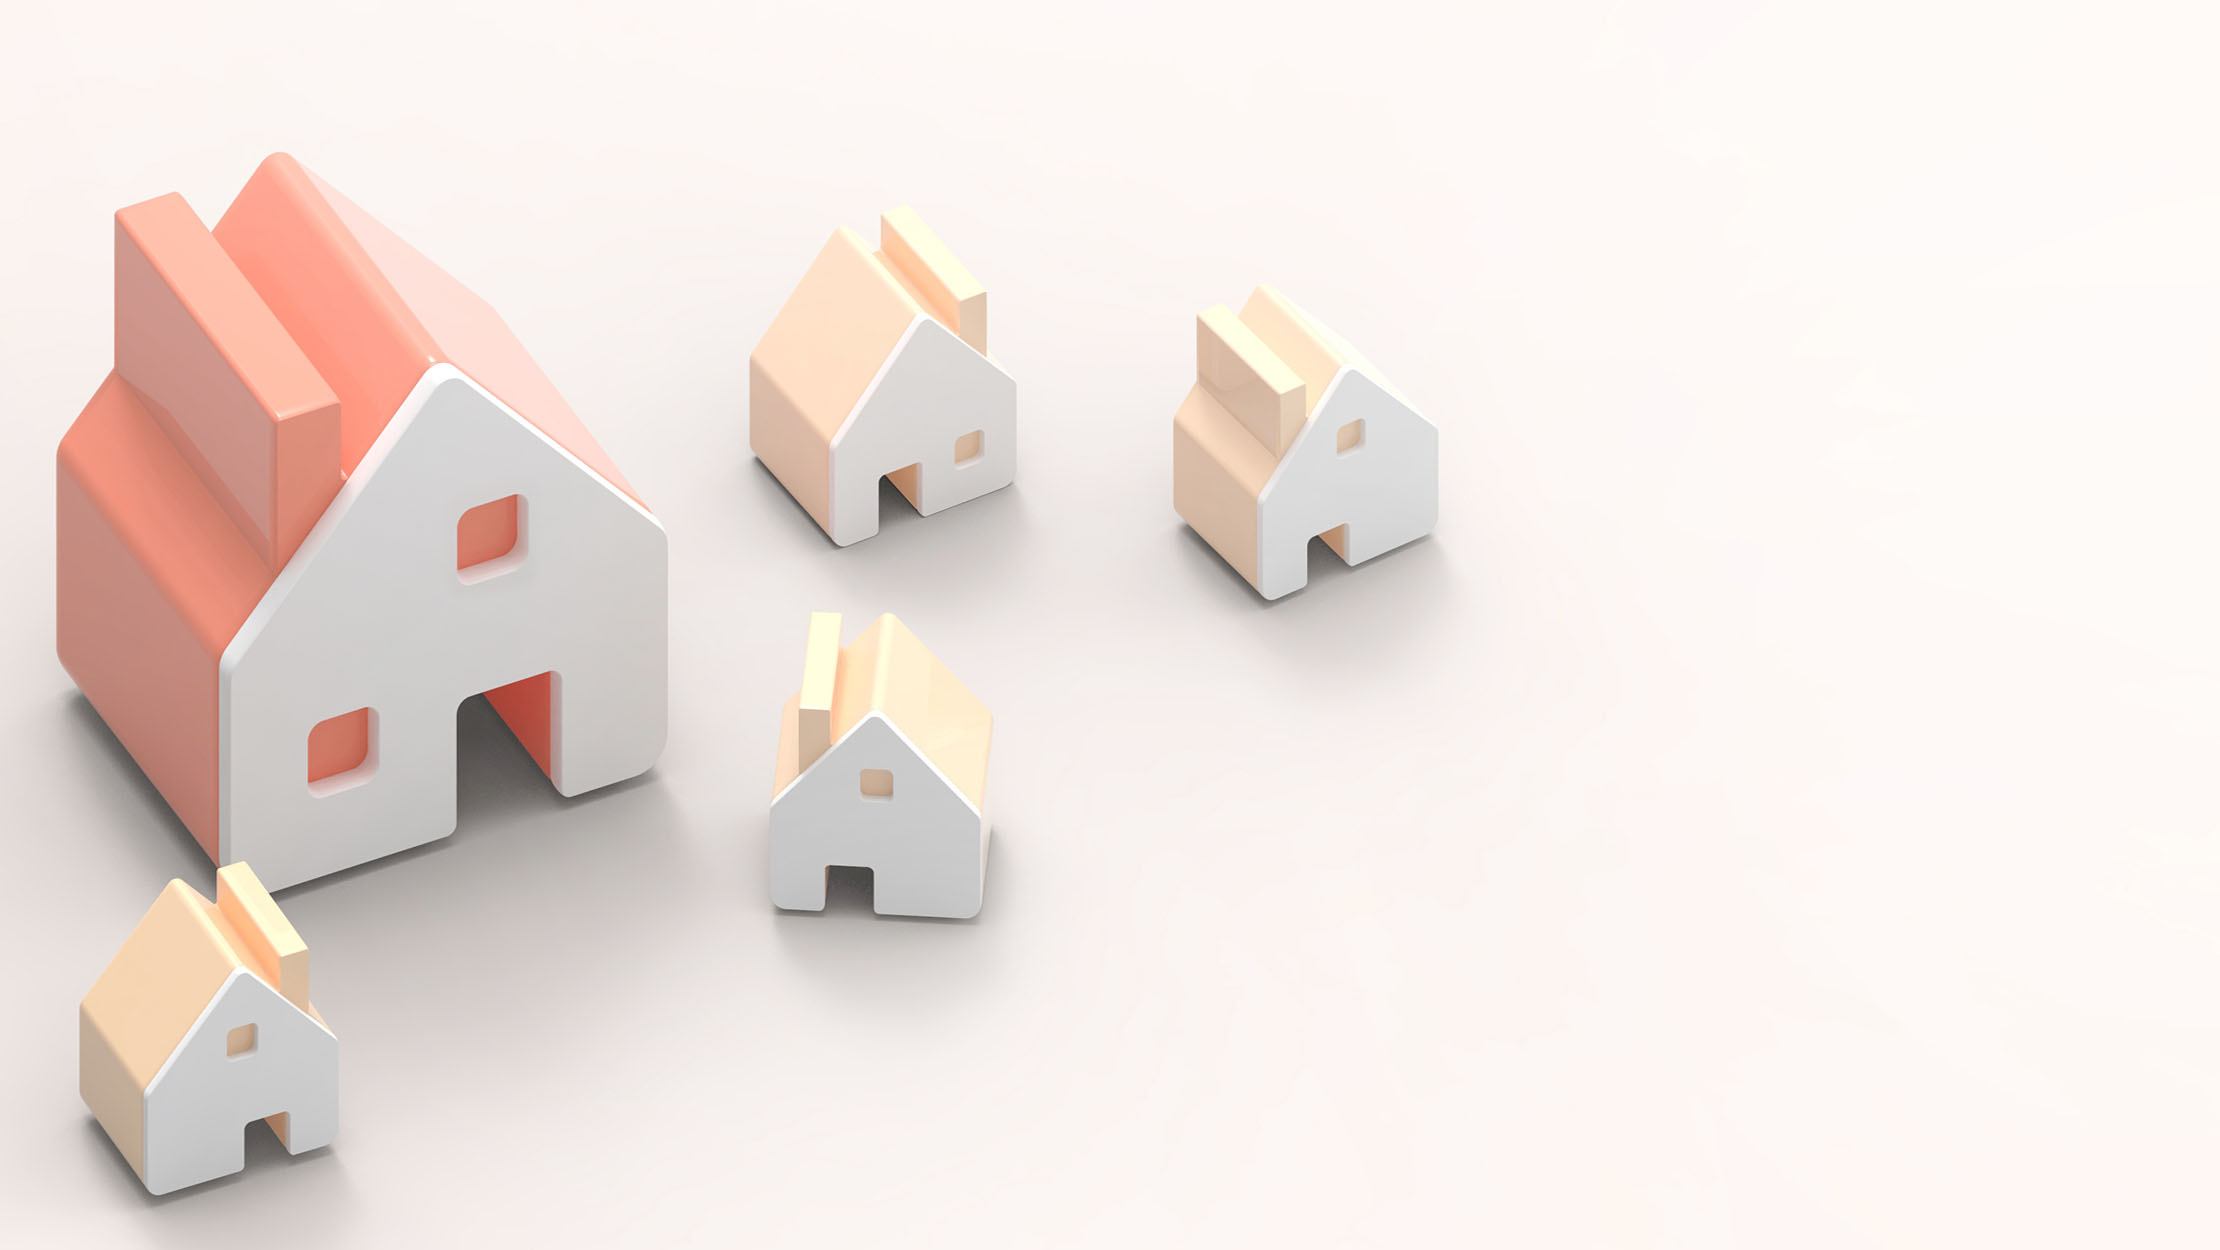 Stock image of mini plastic houses